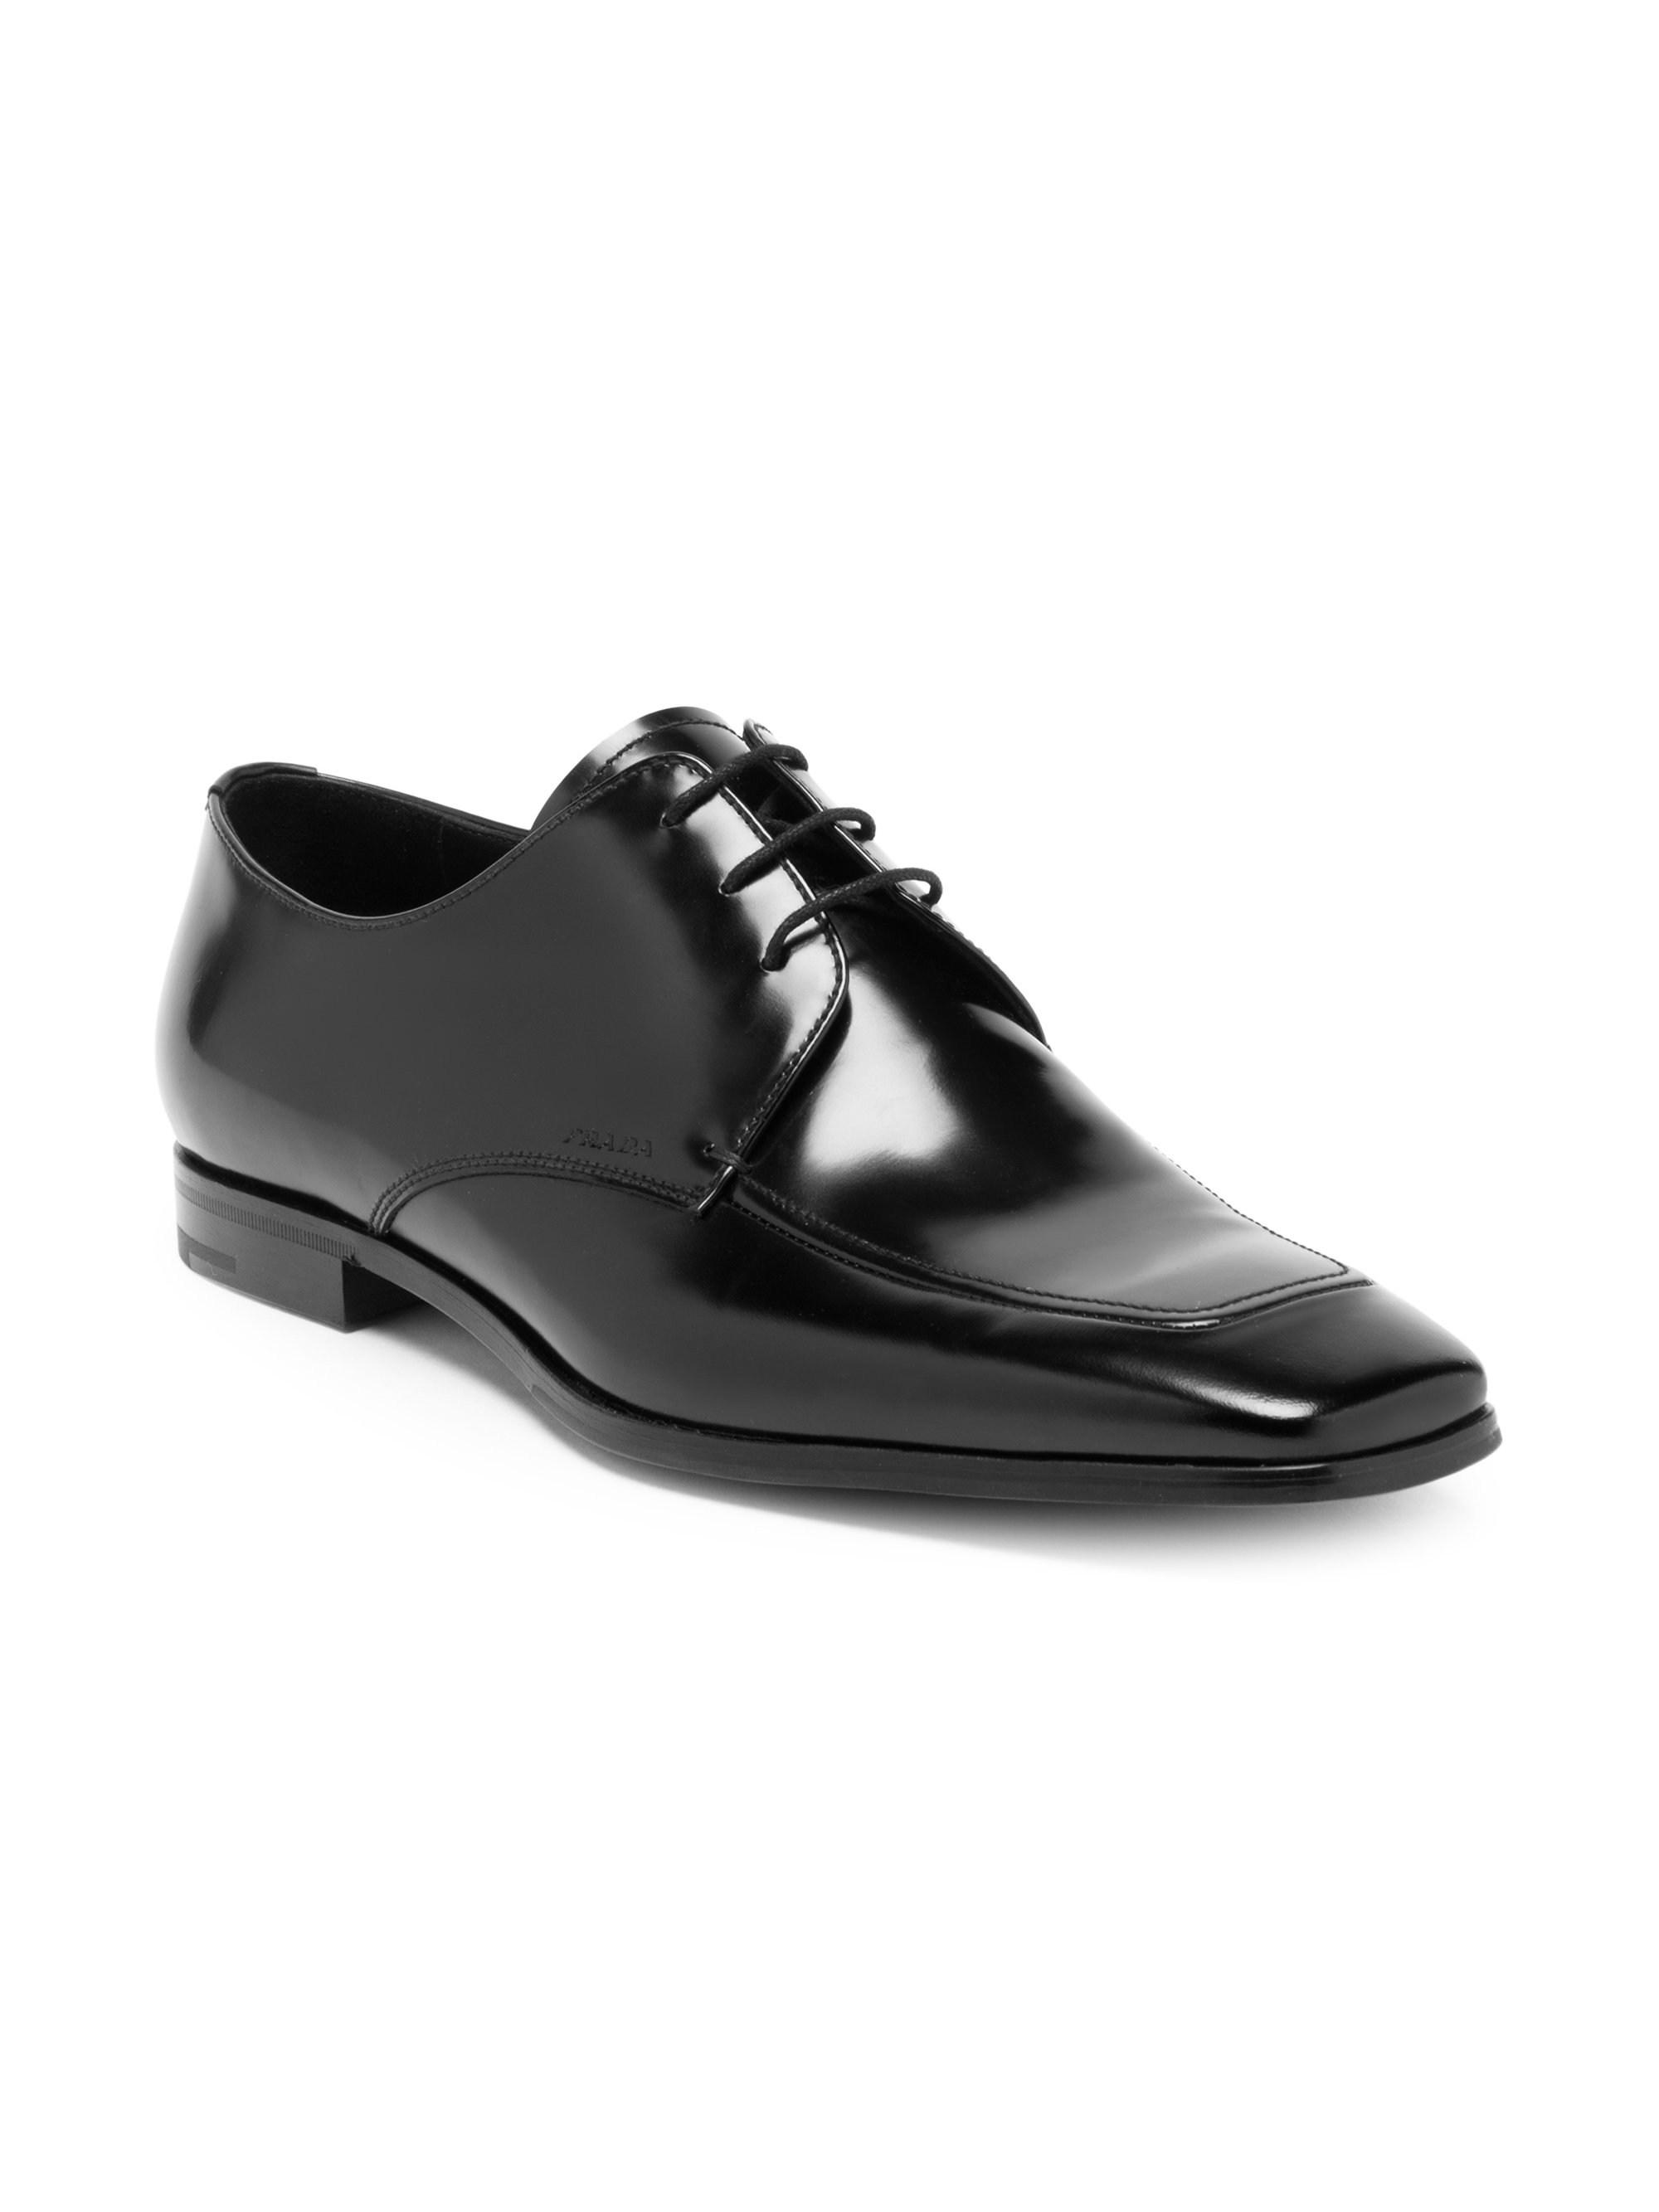 Prada Men S Spazzolato Fume Leather Dress Shoes Black Size 5